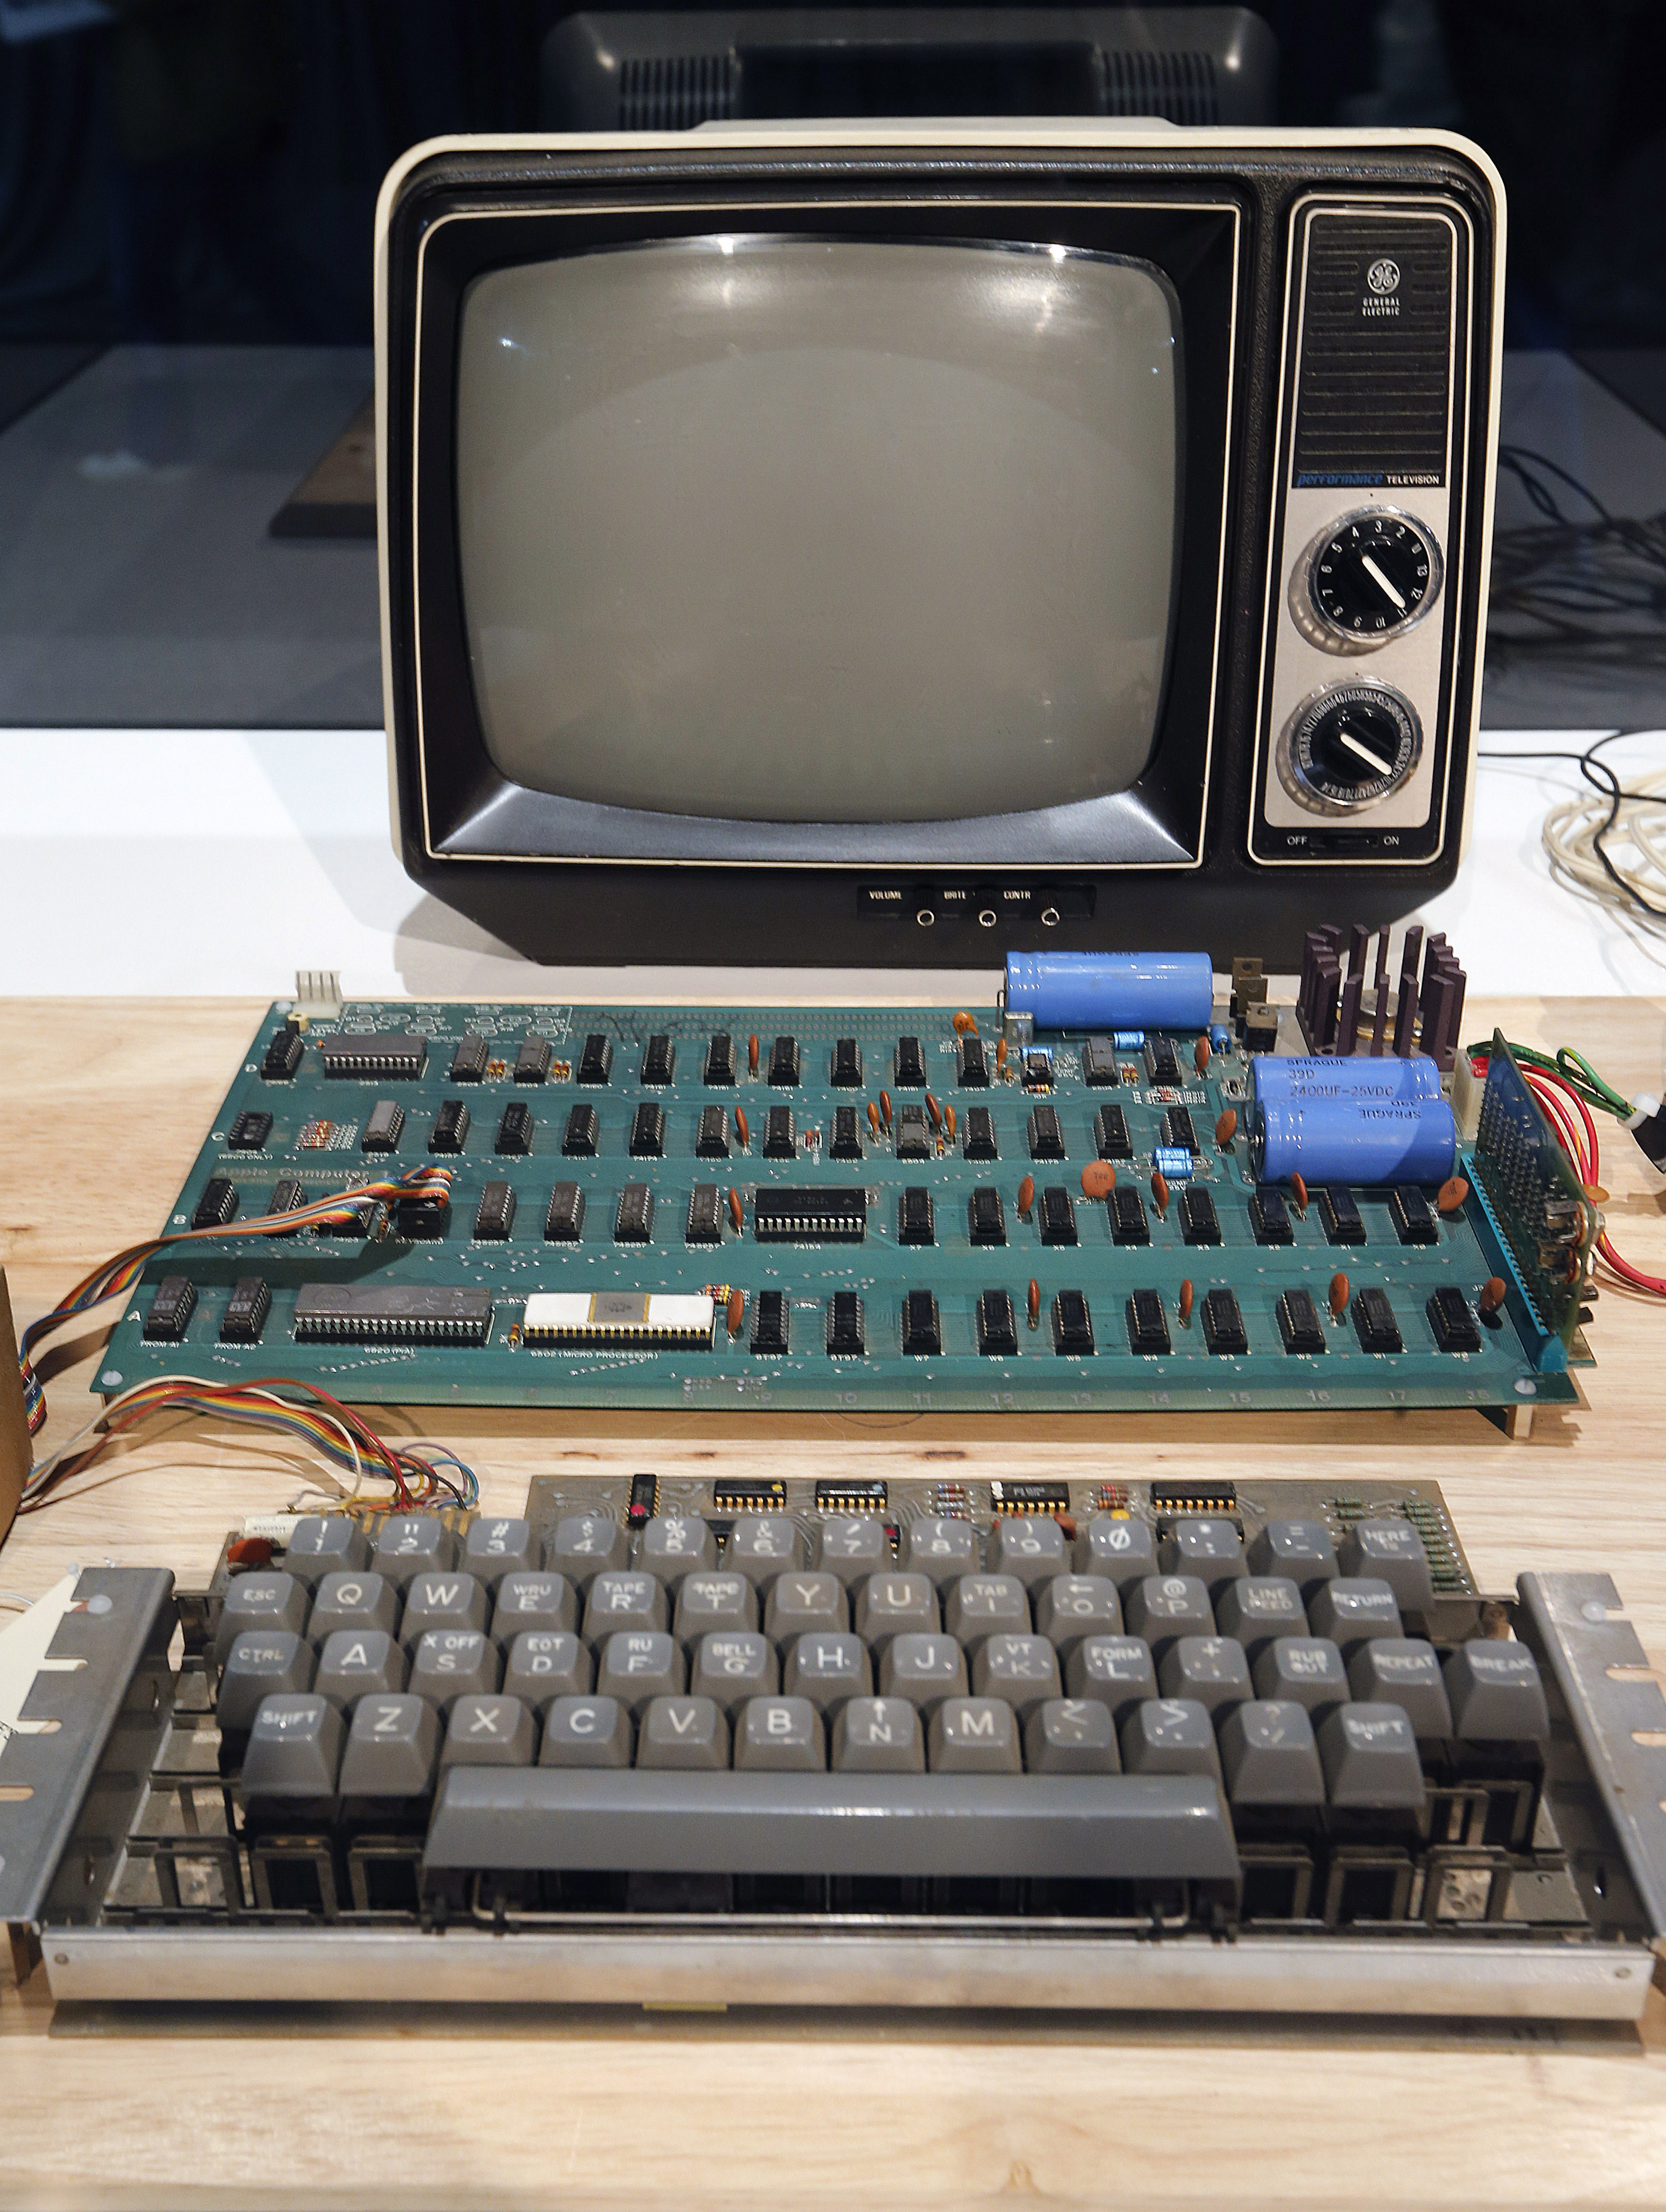 New apple 1. Apple 1. Компьютер Эппл 1976. Первый компьютер Эппл 1. Самый первый компьютер Эппл 1976.